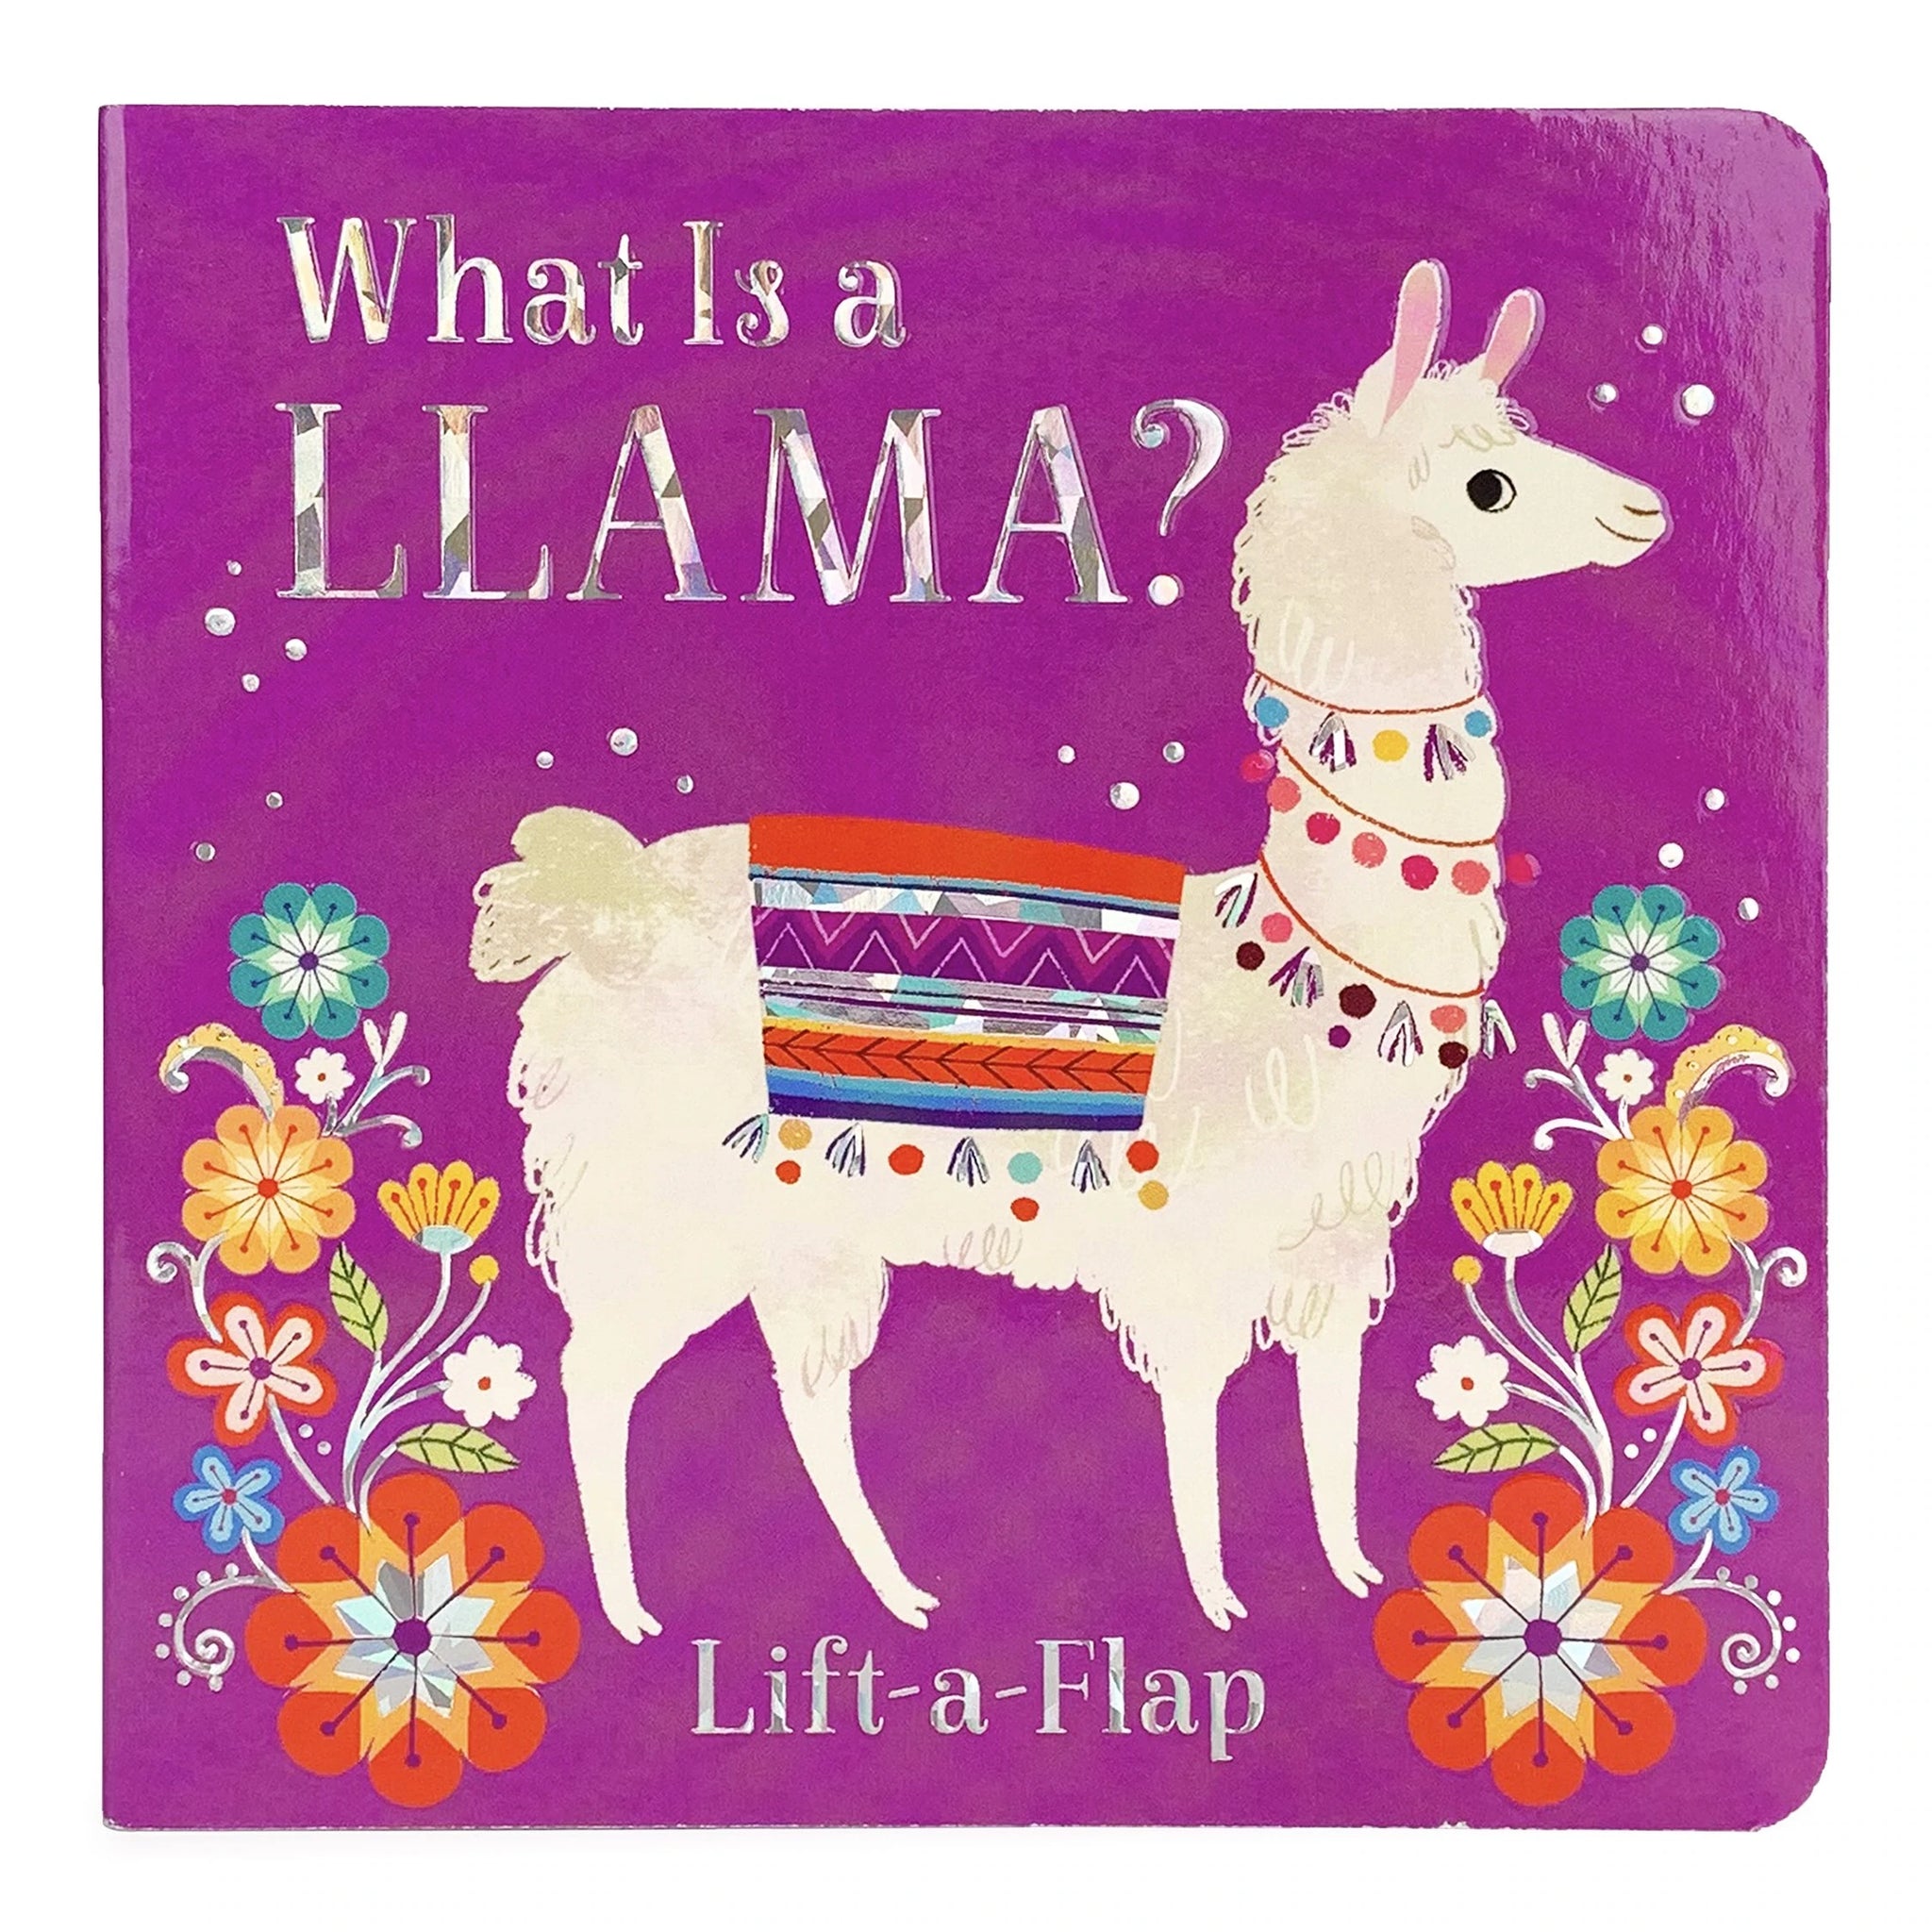 What is a Llama?